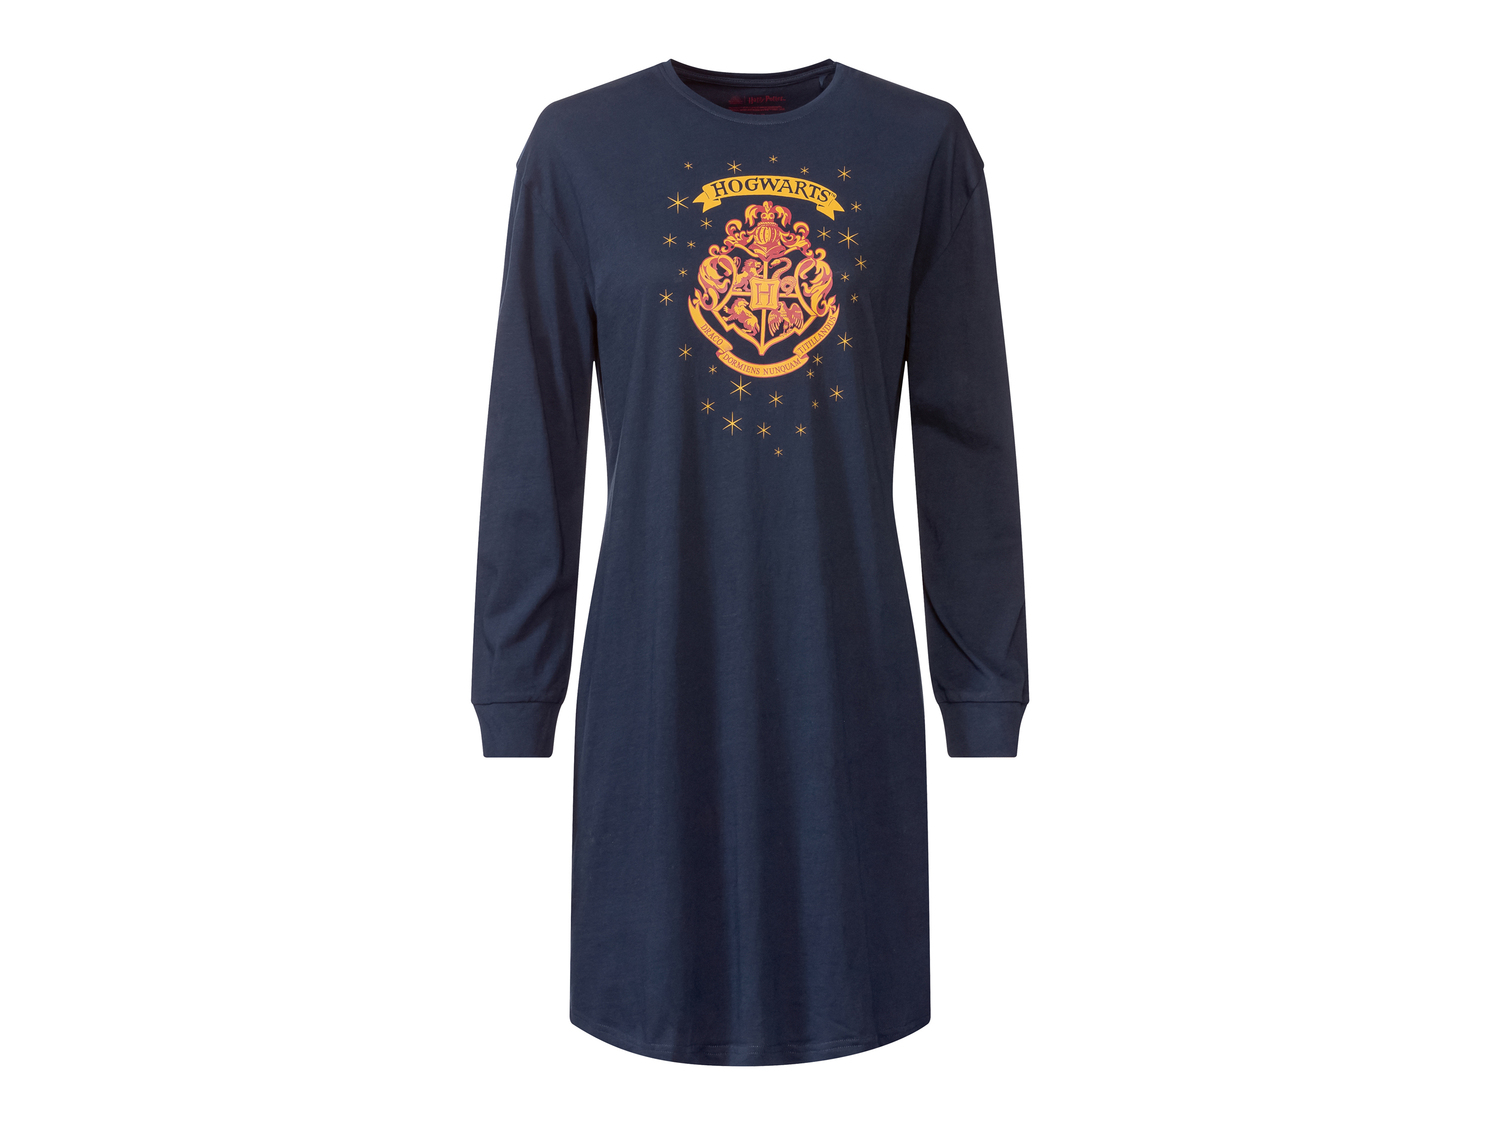 Maxi t-shirt da notte per donna Harry Potter Oeko-tex, prezzo 8.99 € 
Misure: ...